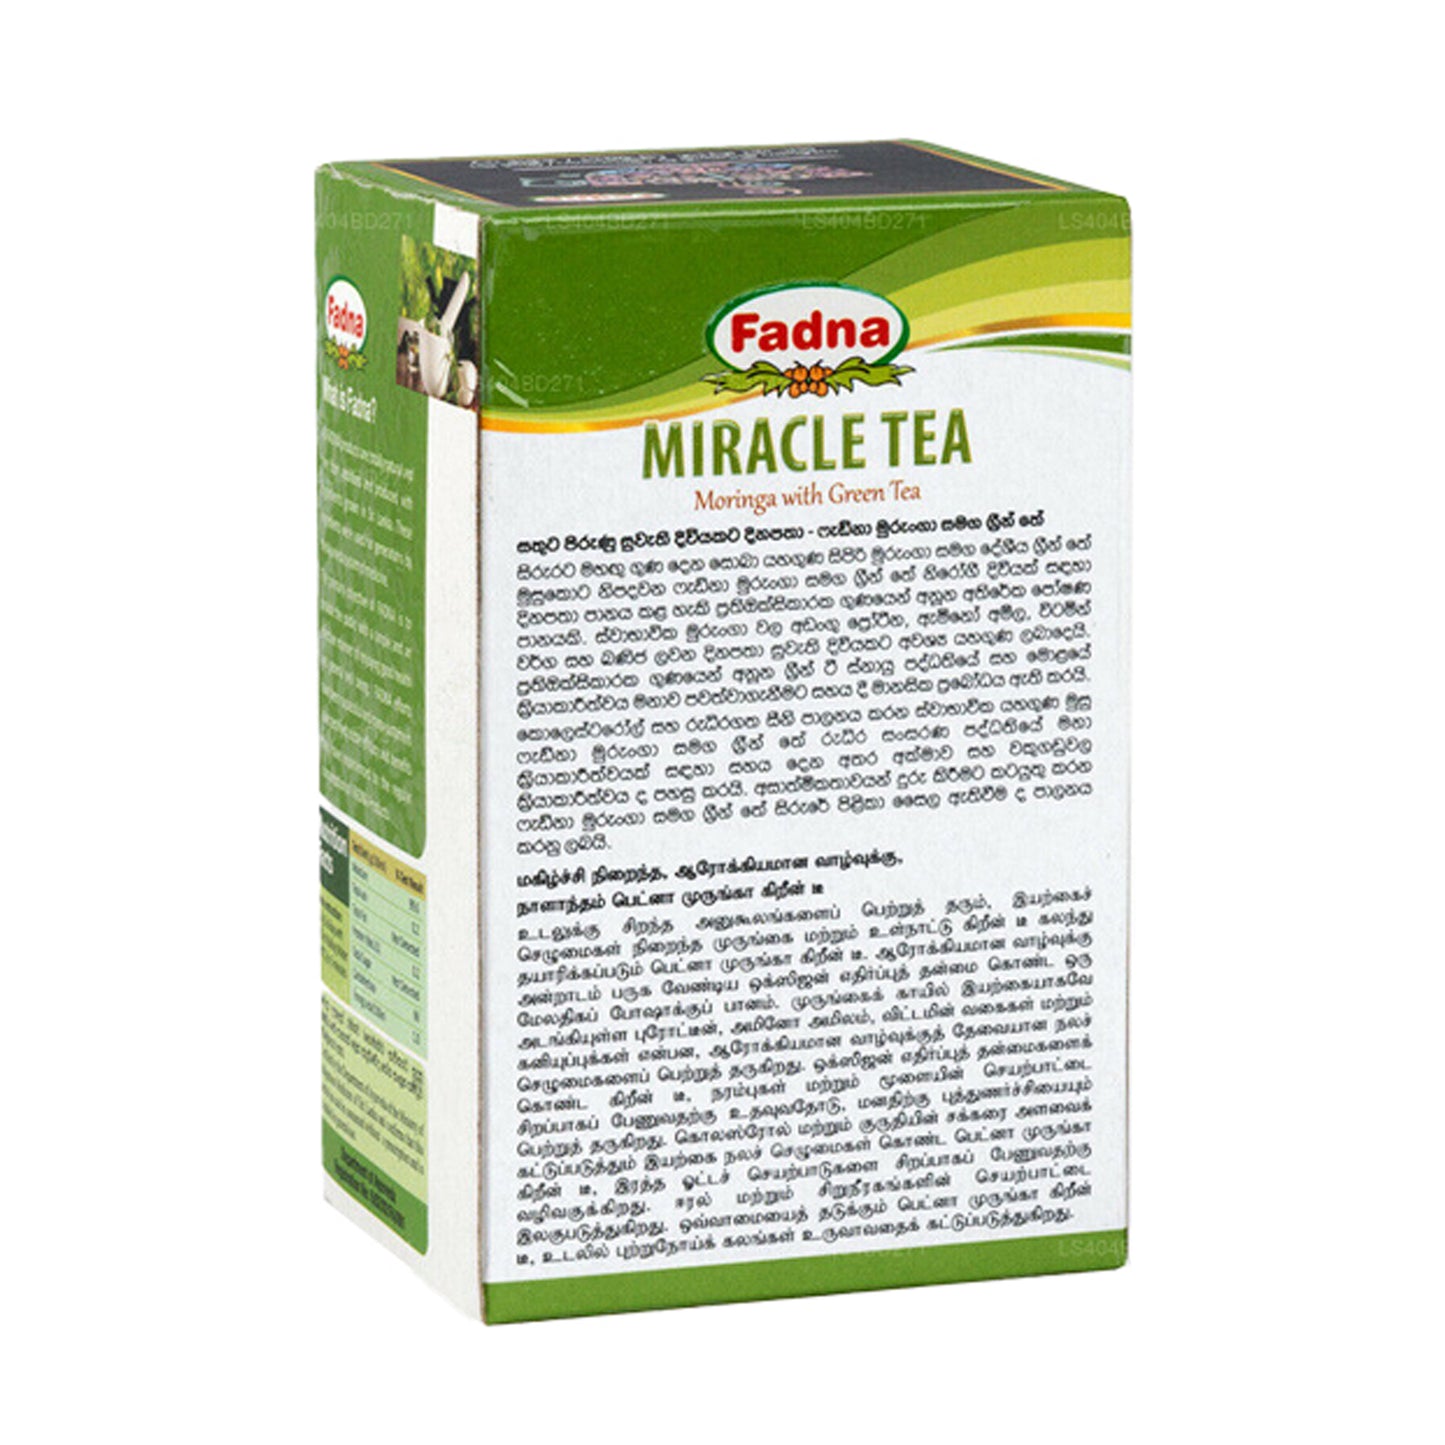 Fadna Miracle Tea Moringa rohelise teega (40g) 20 tee kotid